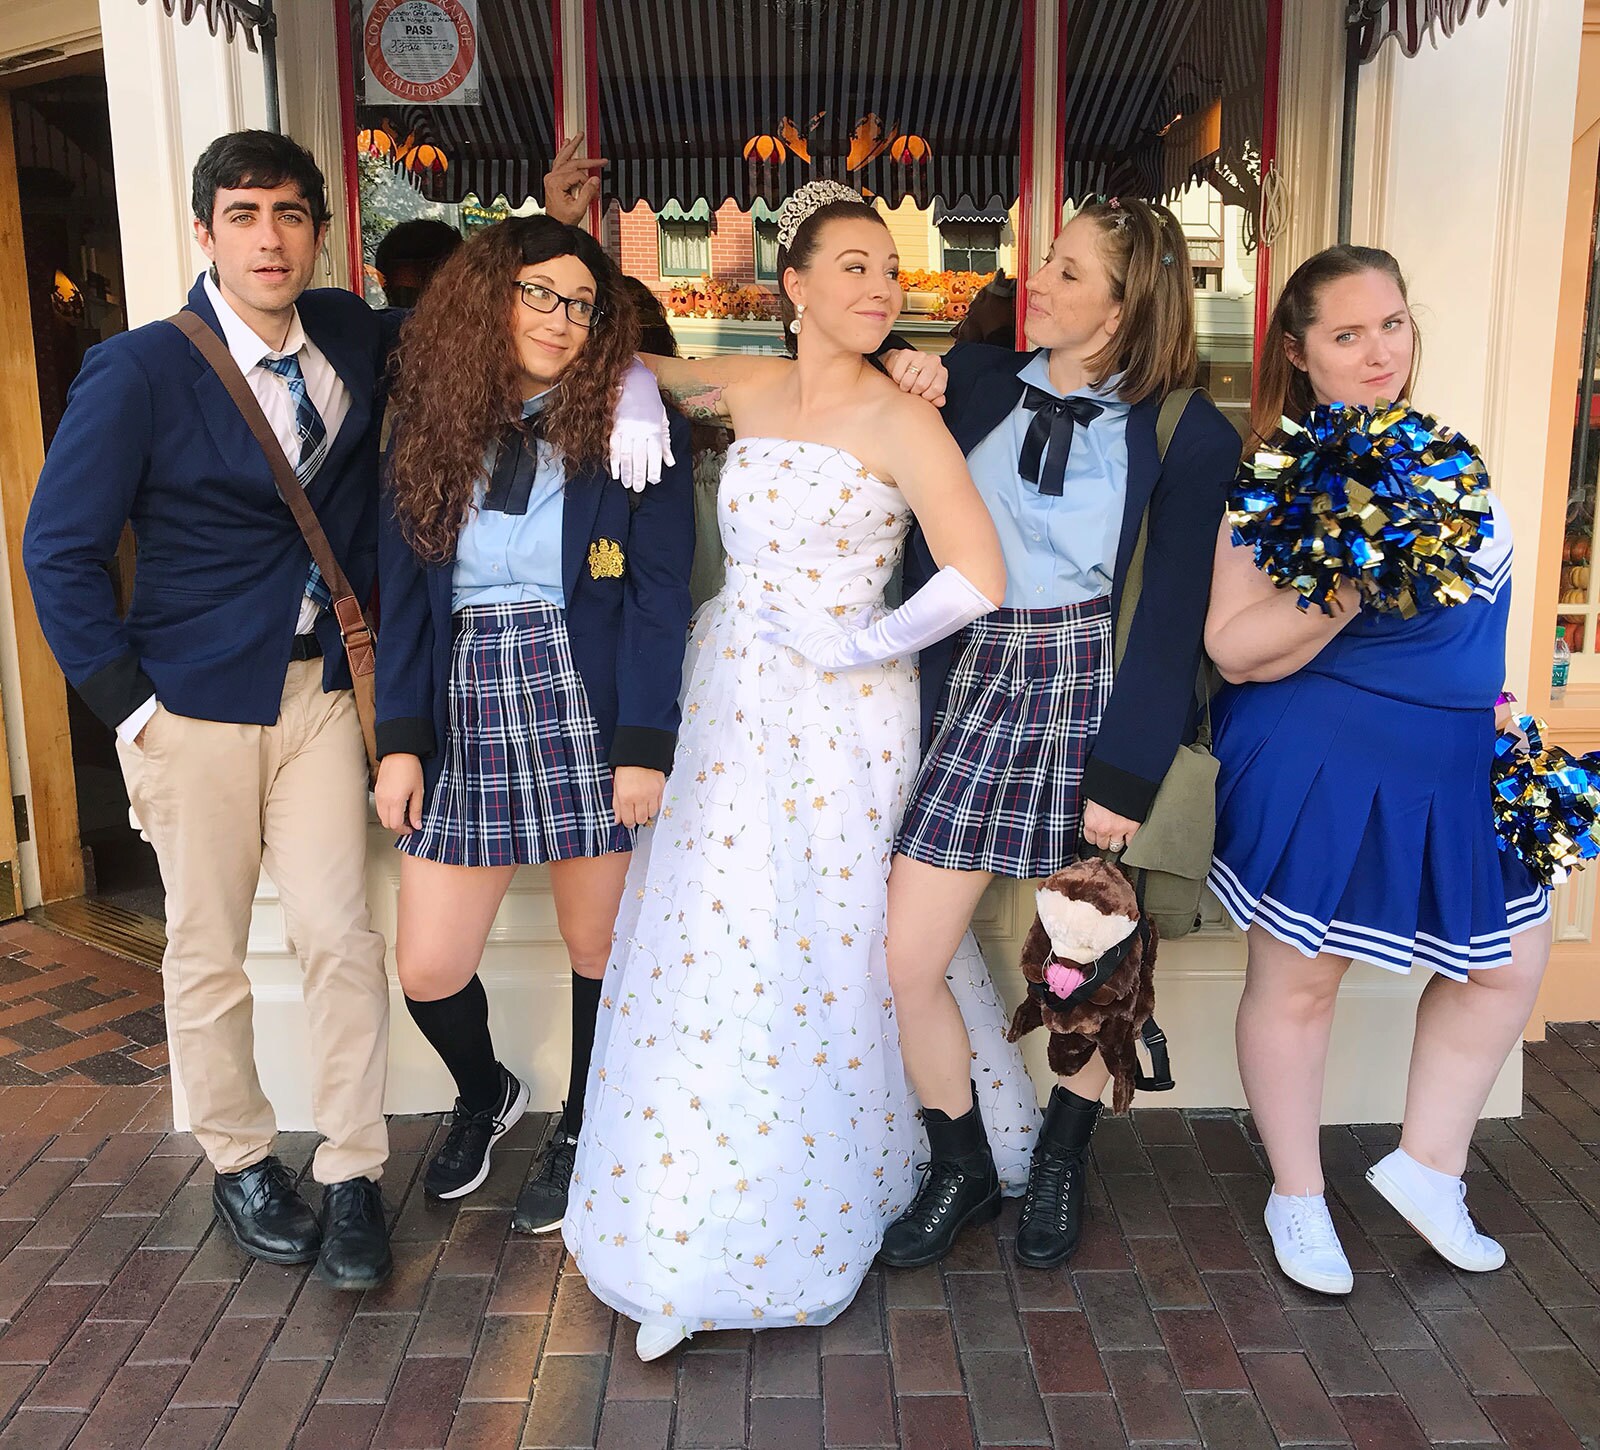 Shut Up! Shut Up! This Princess Diaries Group Halloween Costume is So Good